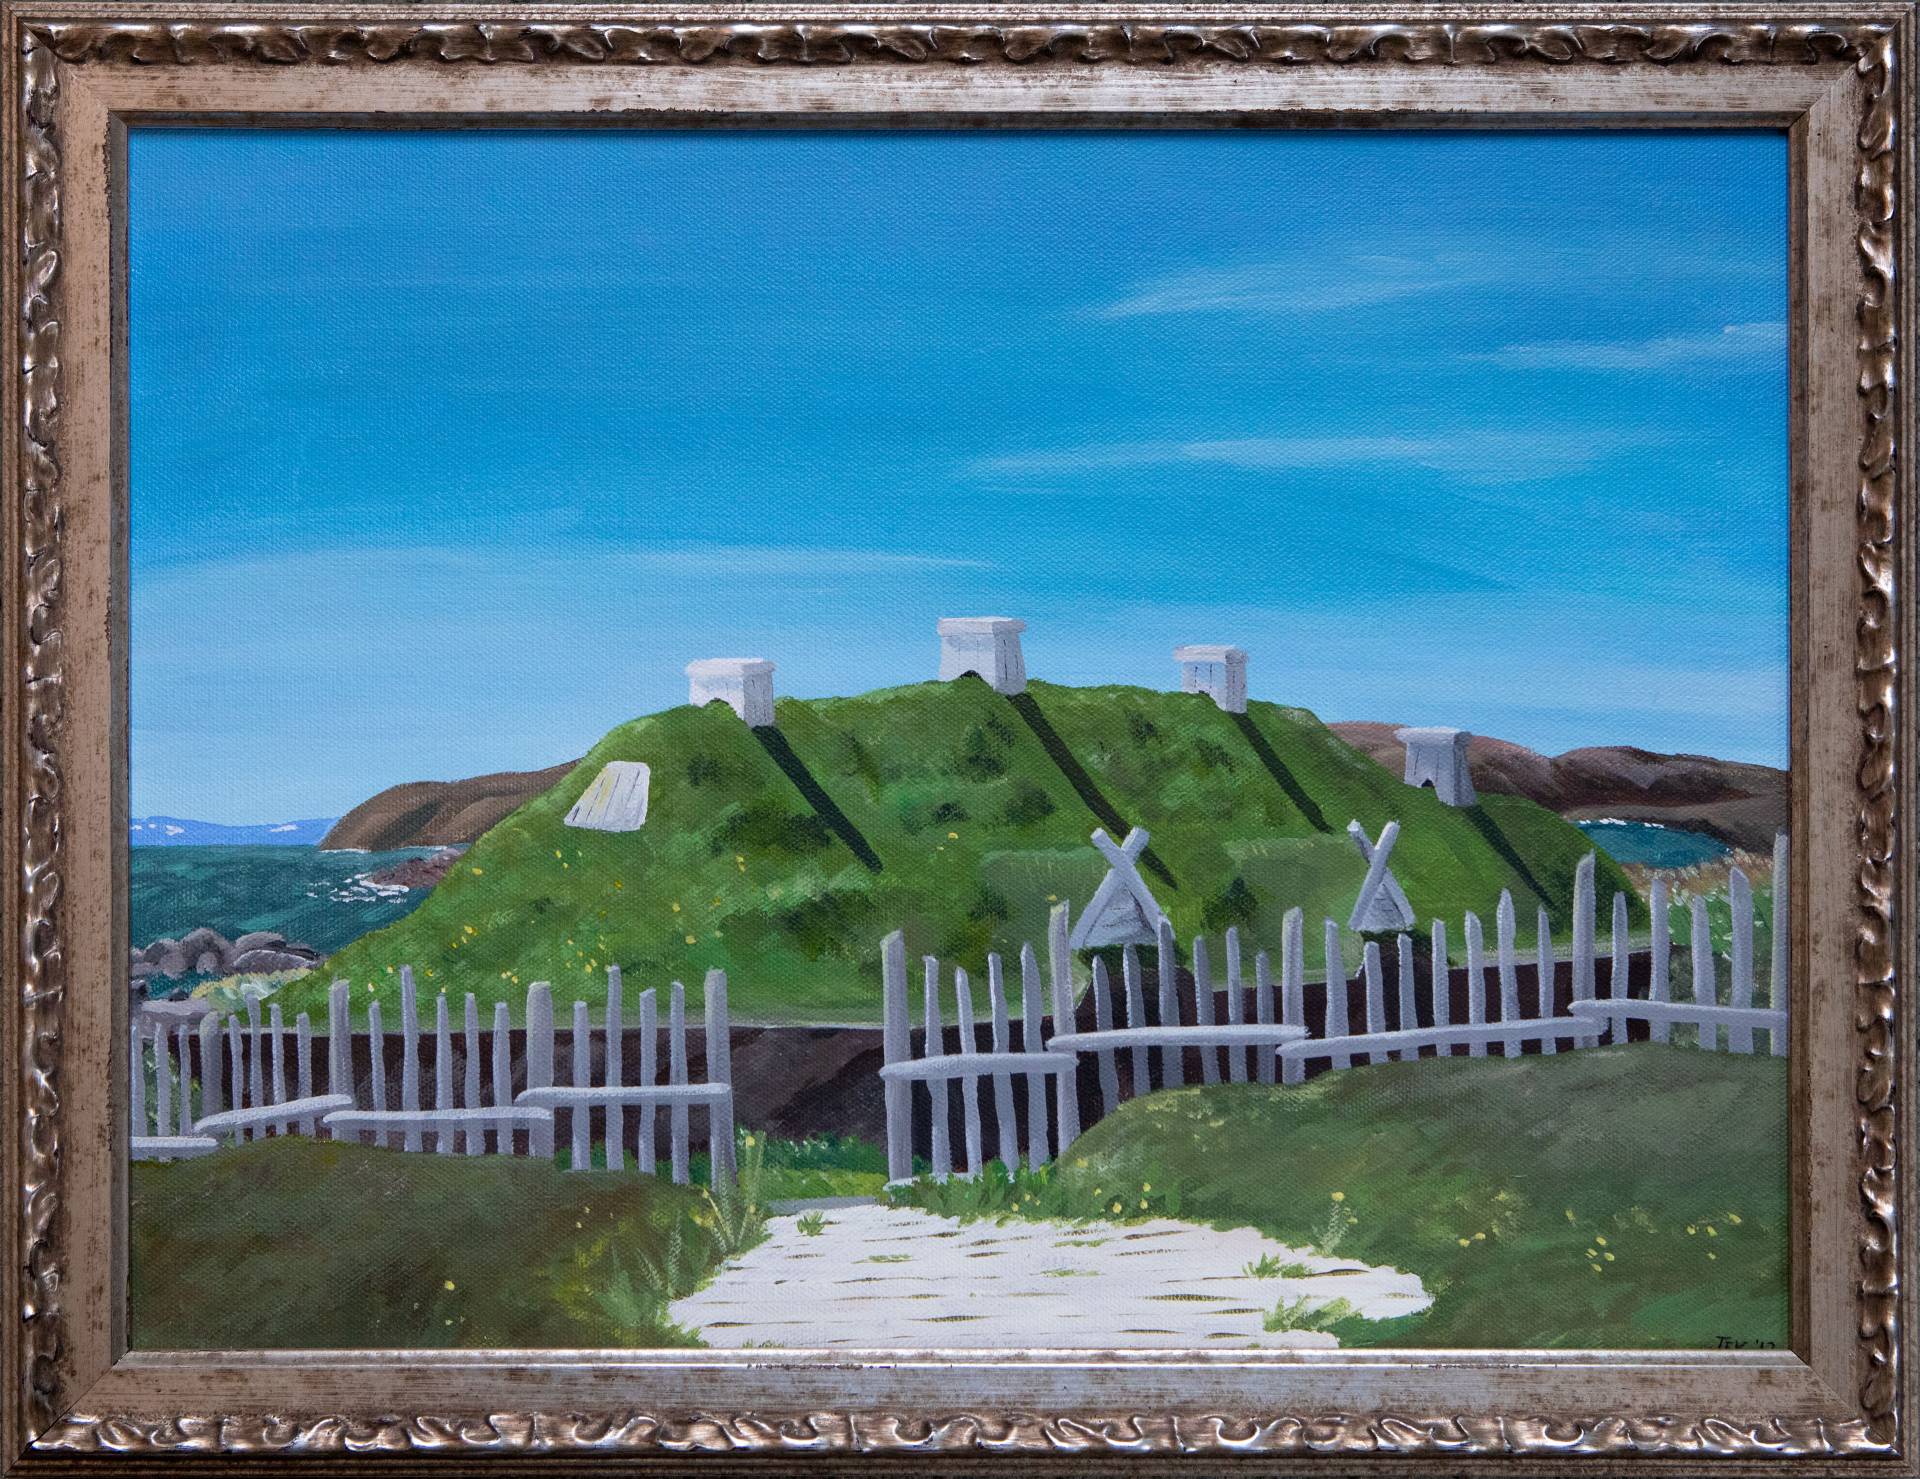 Painting of Newfoundland village